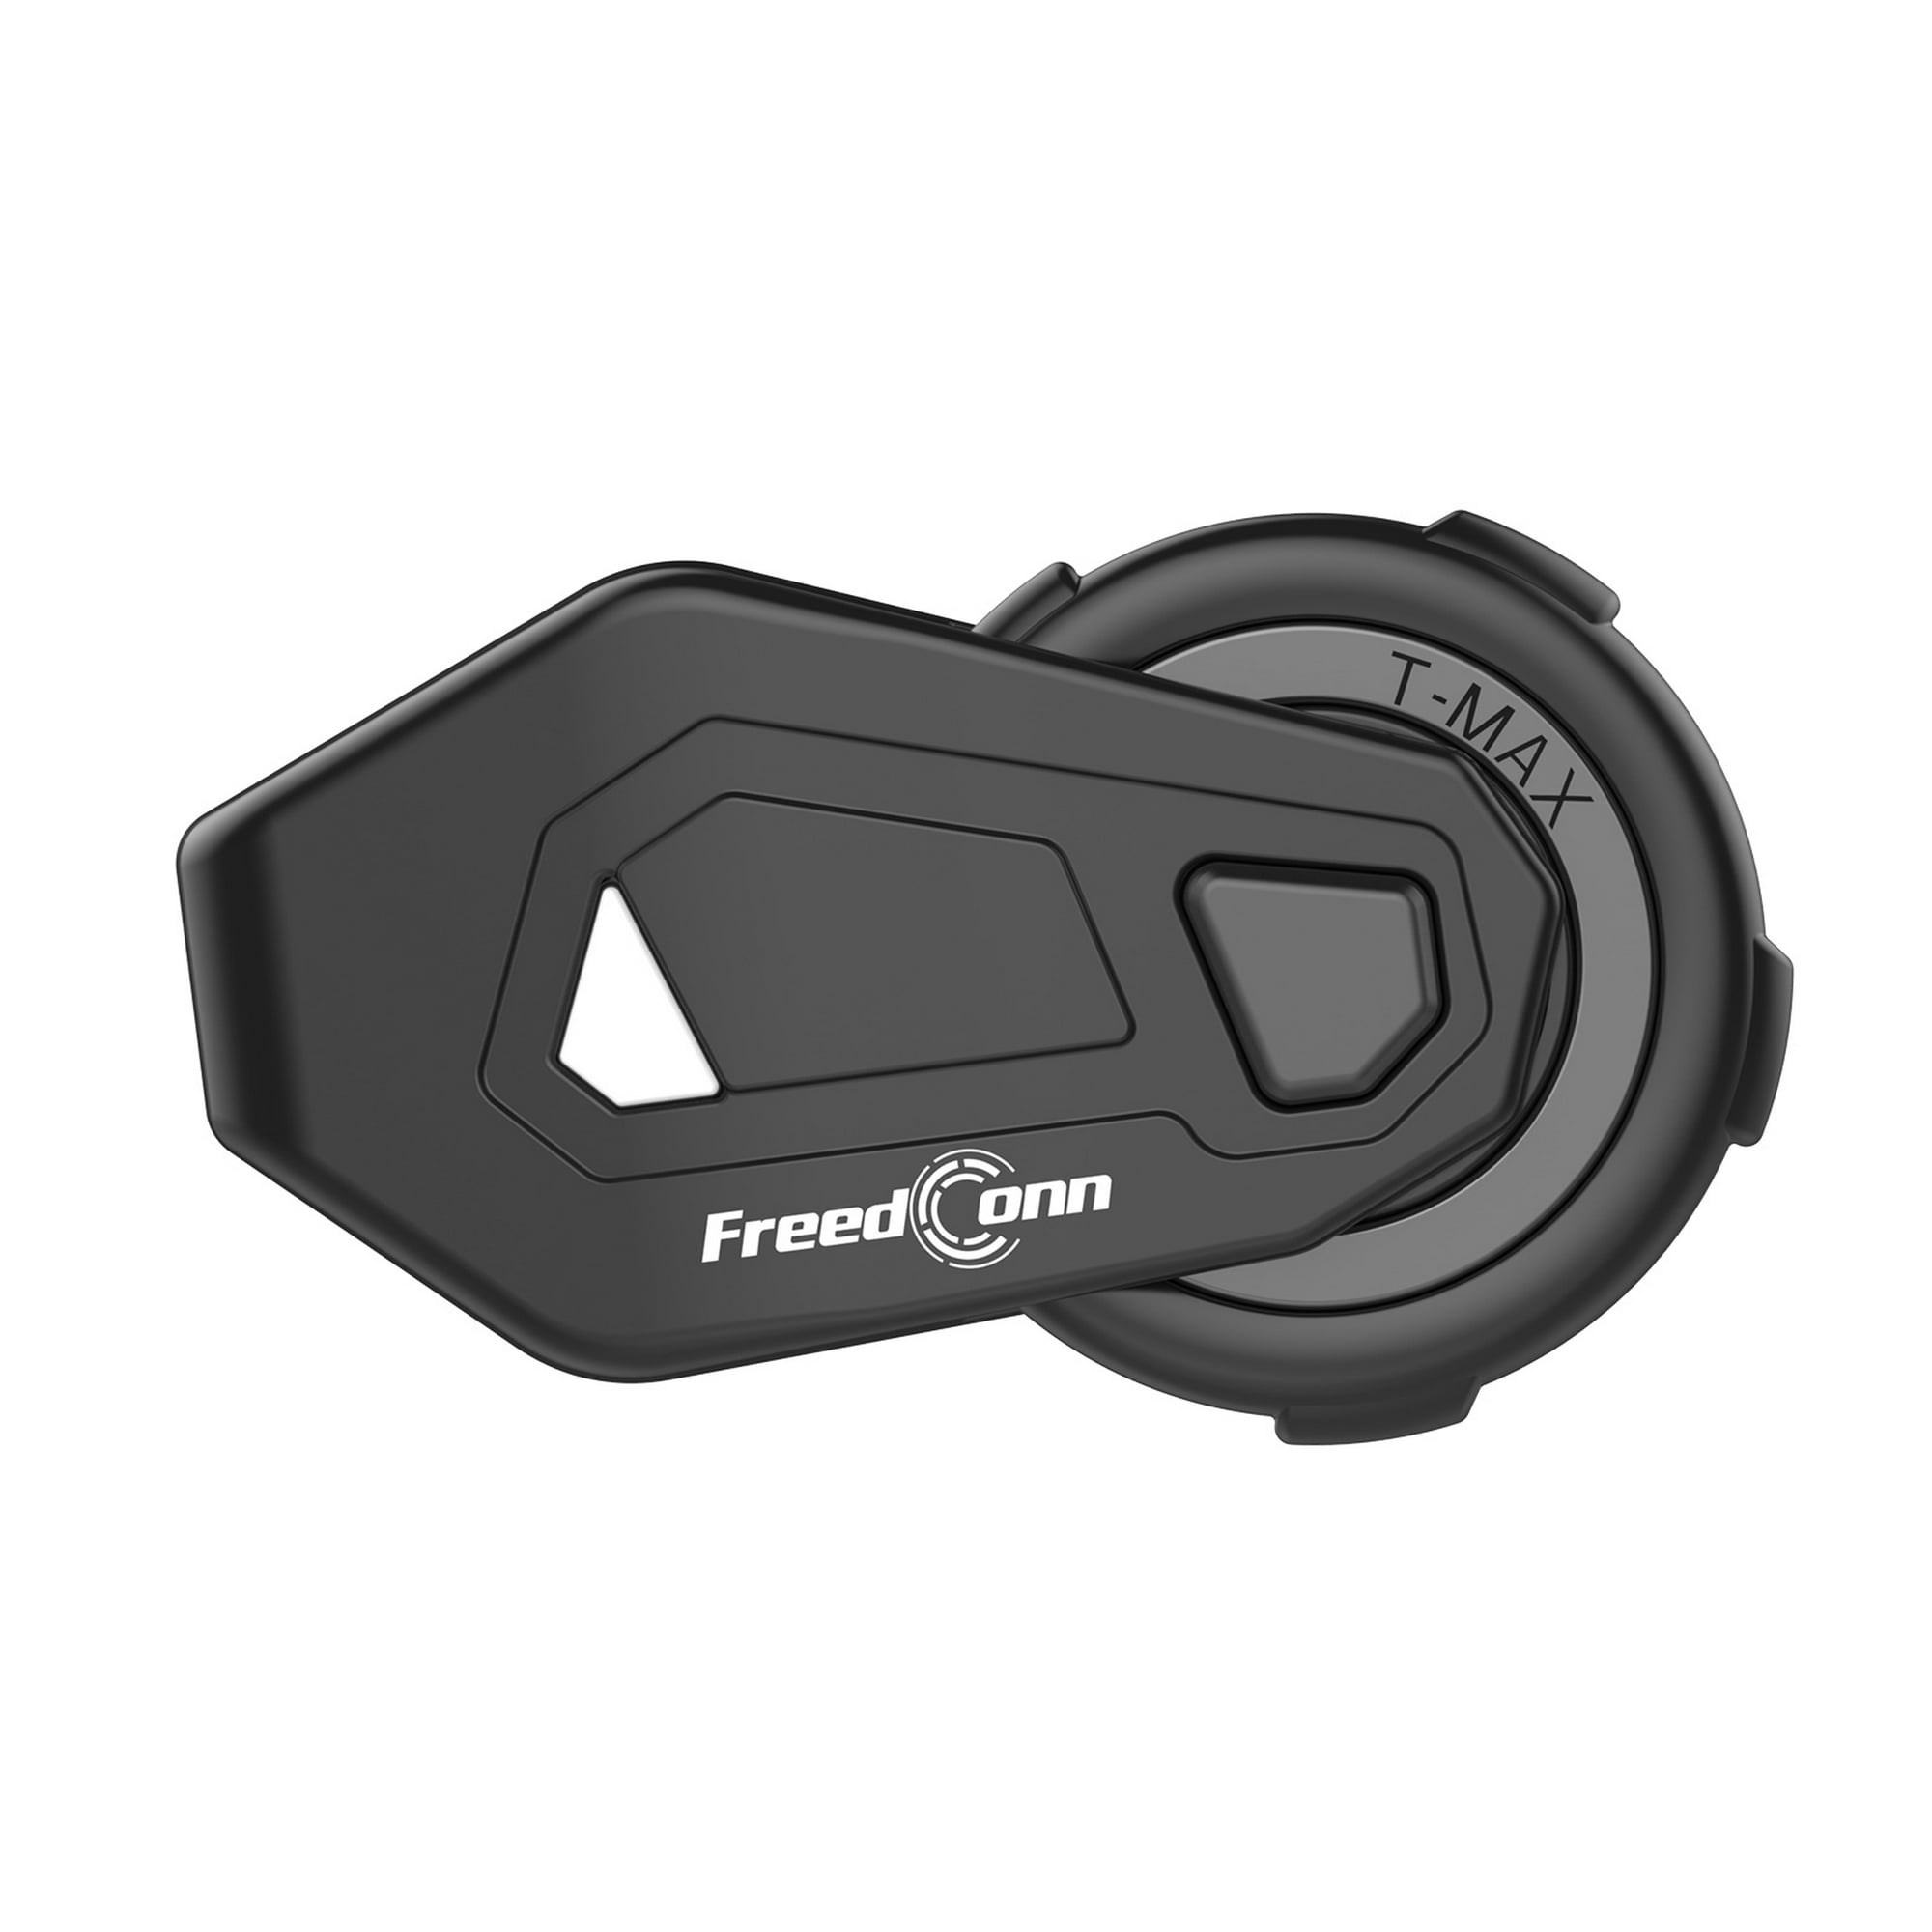 Manos libres bluetooth freedconn t-max m para casco moto y radio